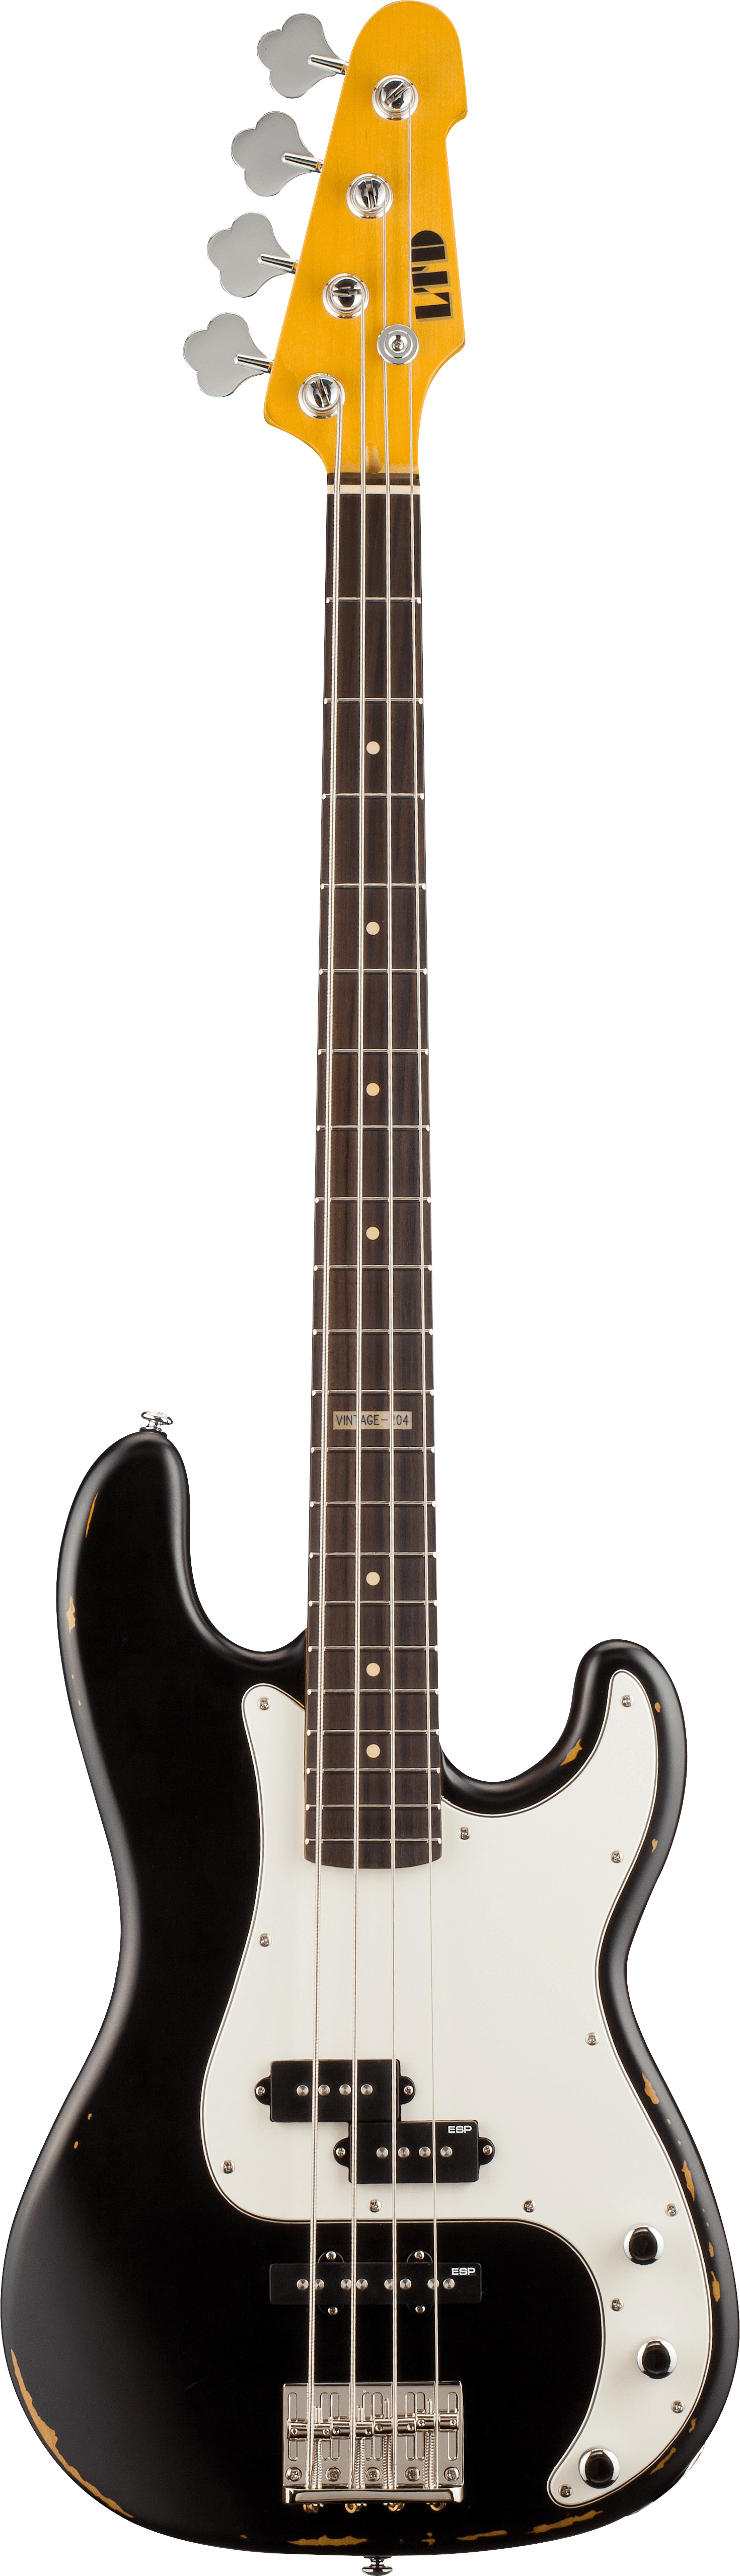 Black Electric Bass Guitar PNG